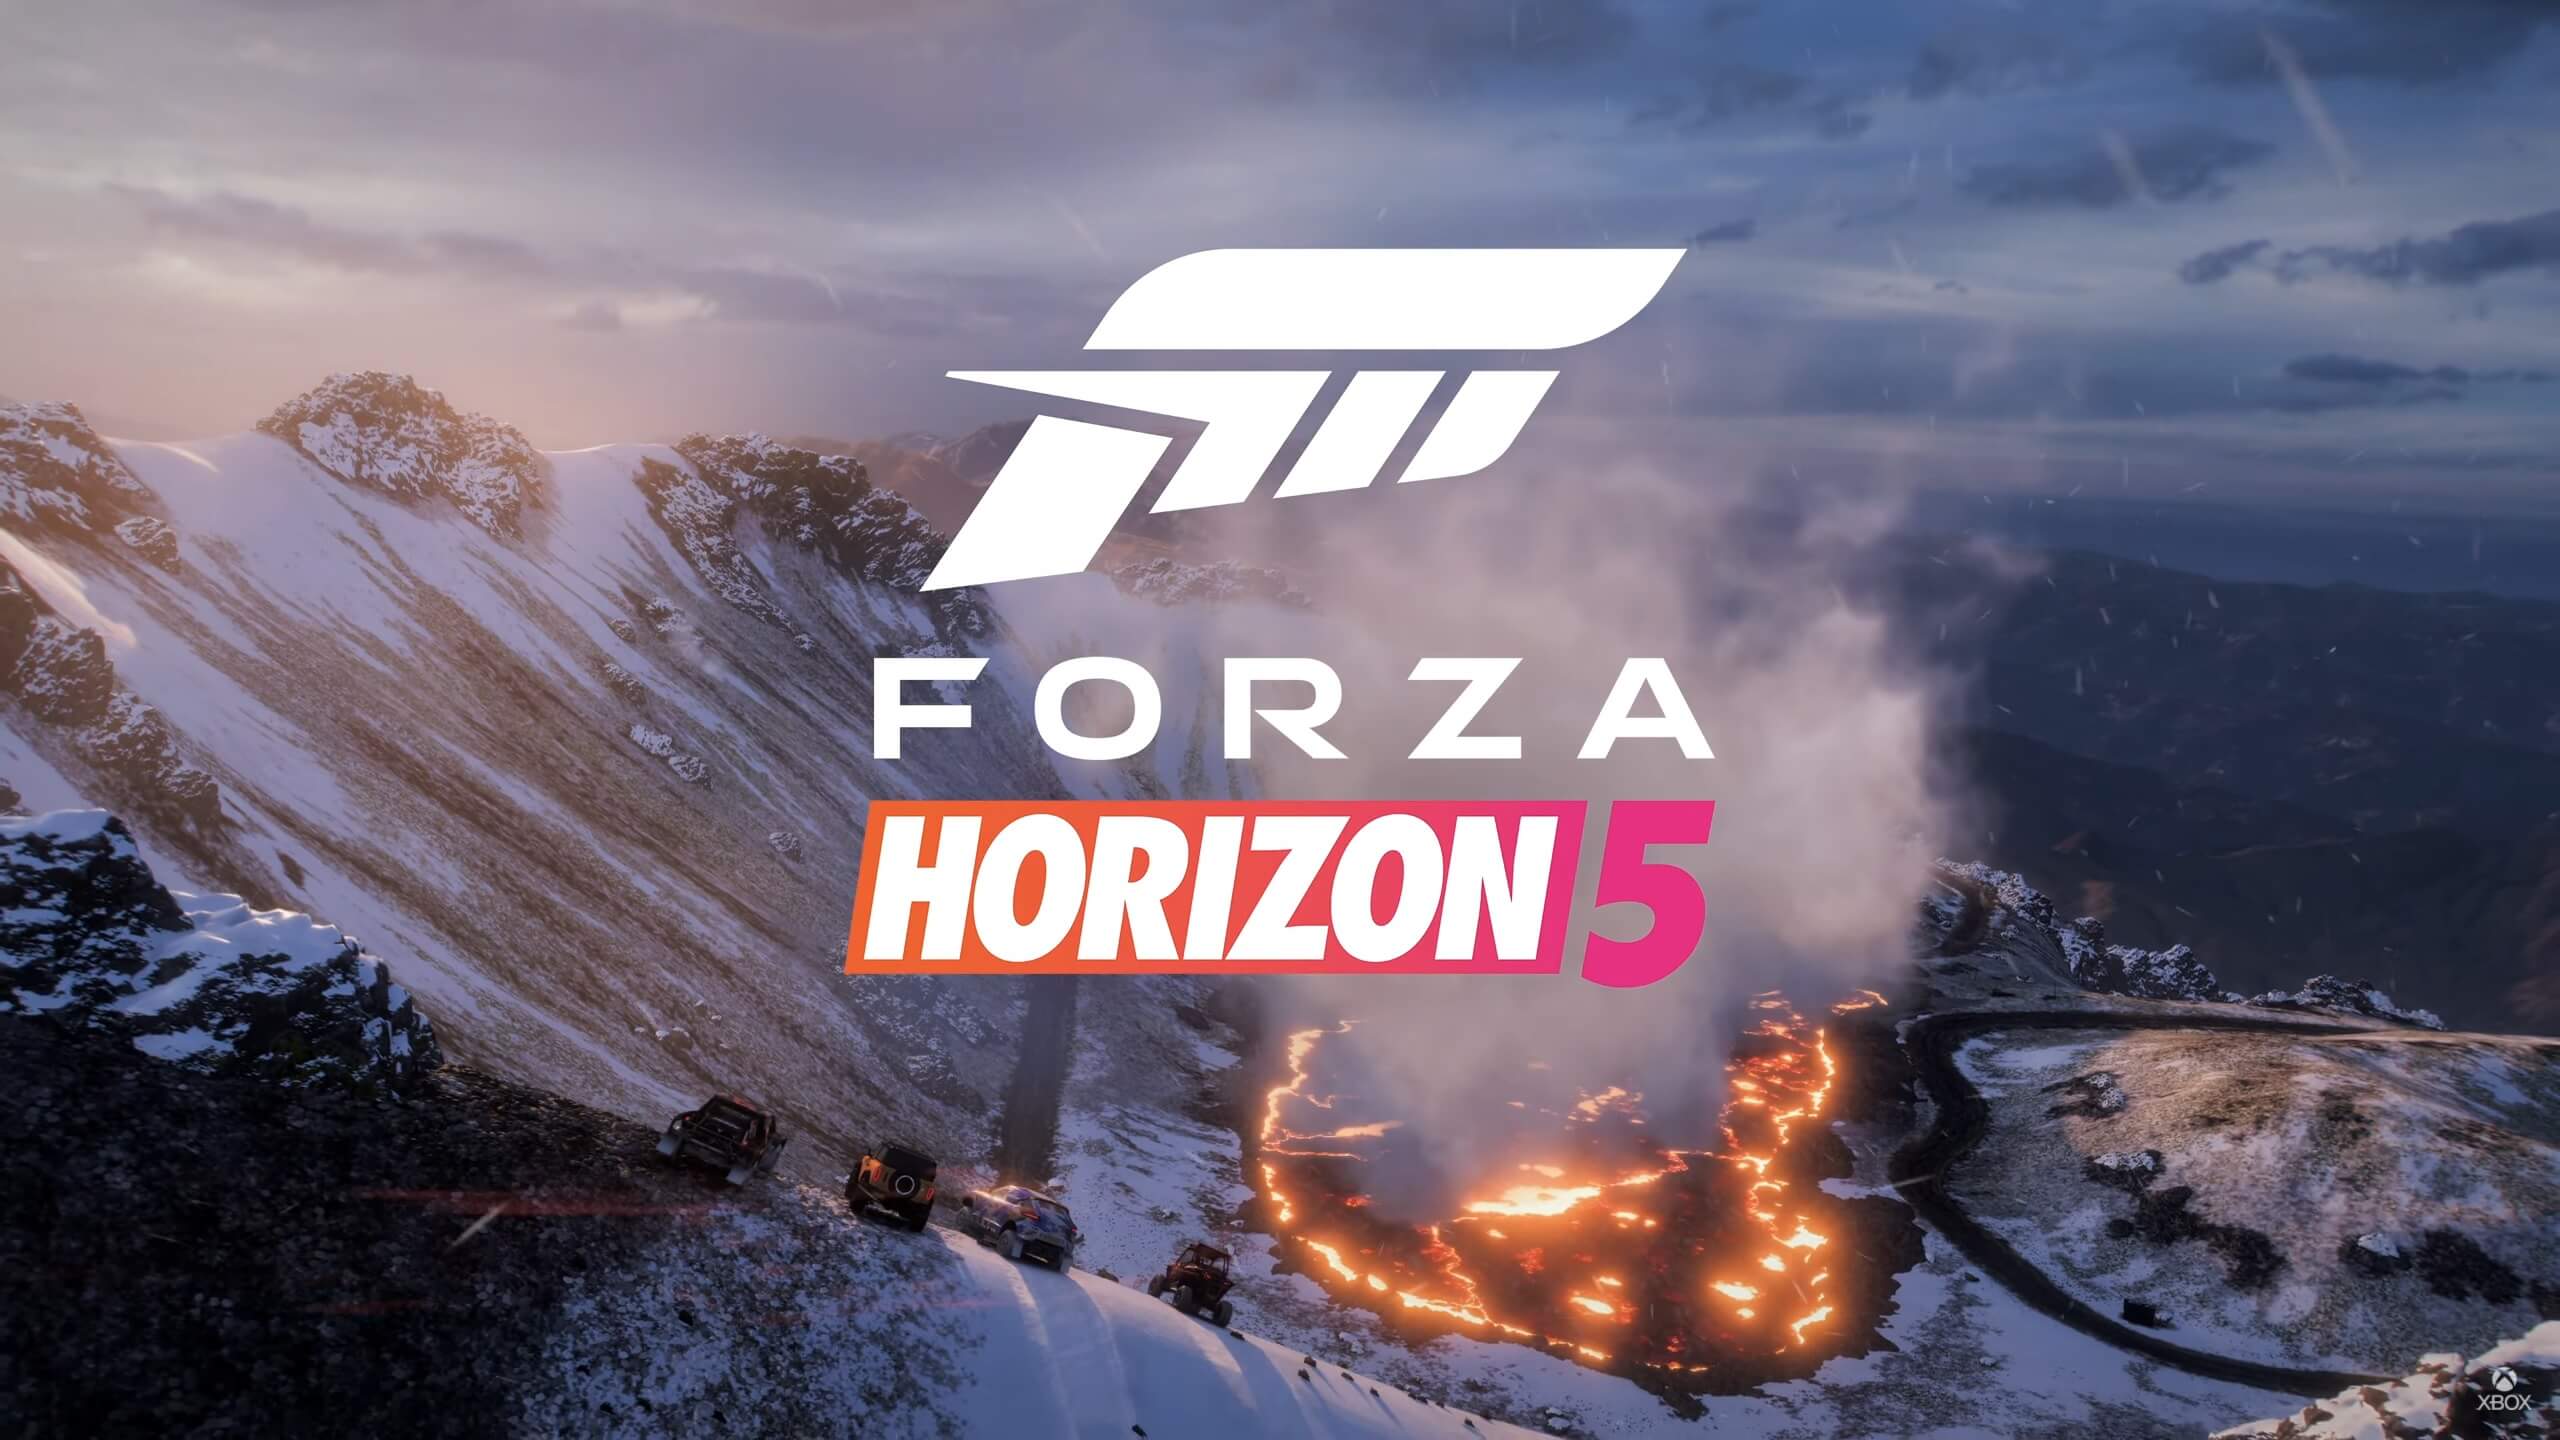 forza horizon 5 game save file location pc